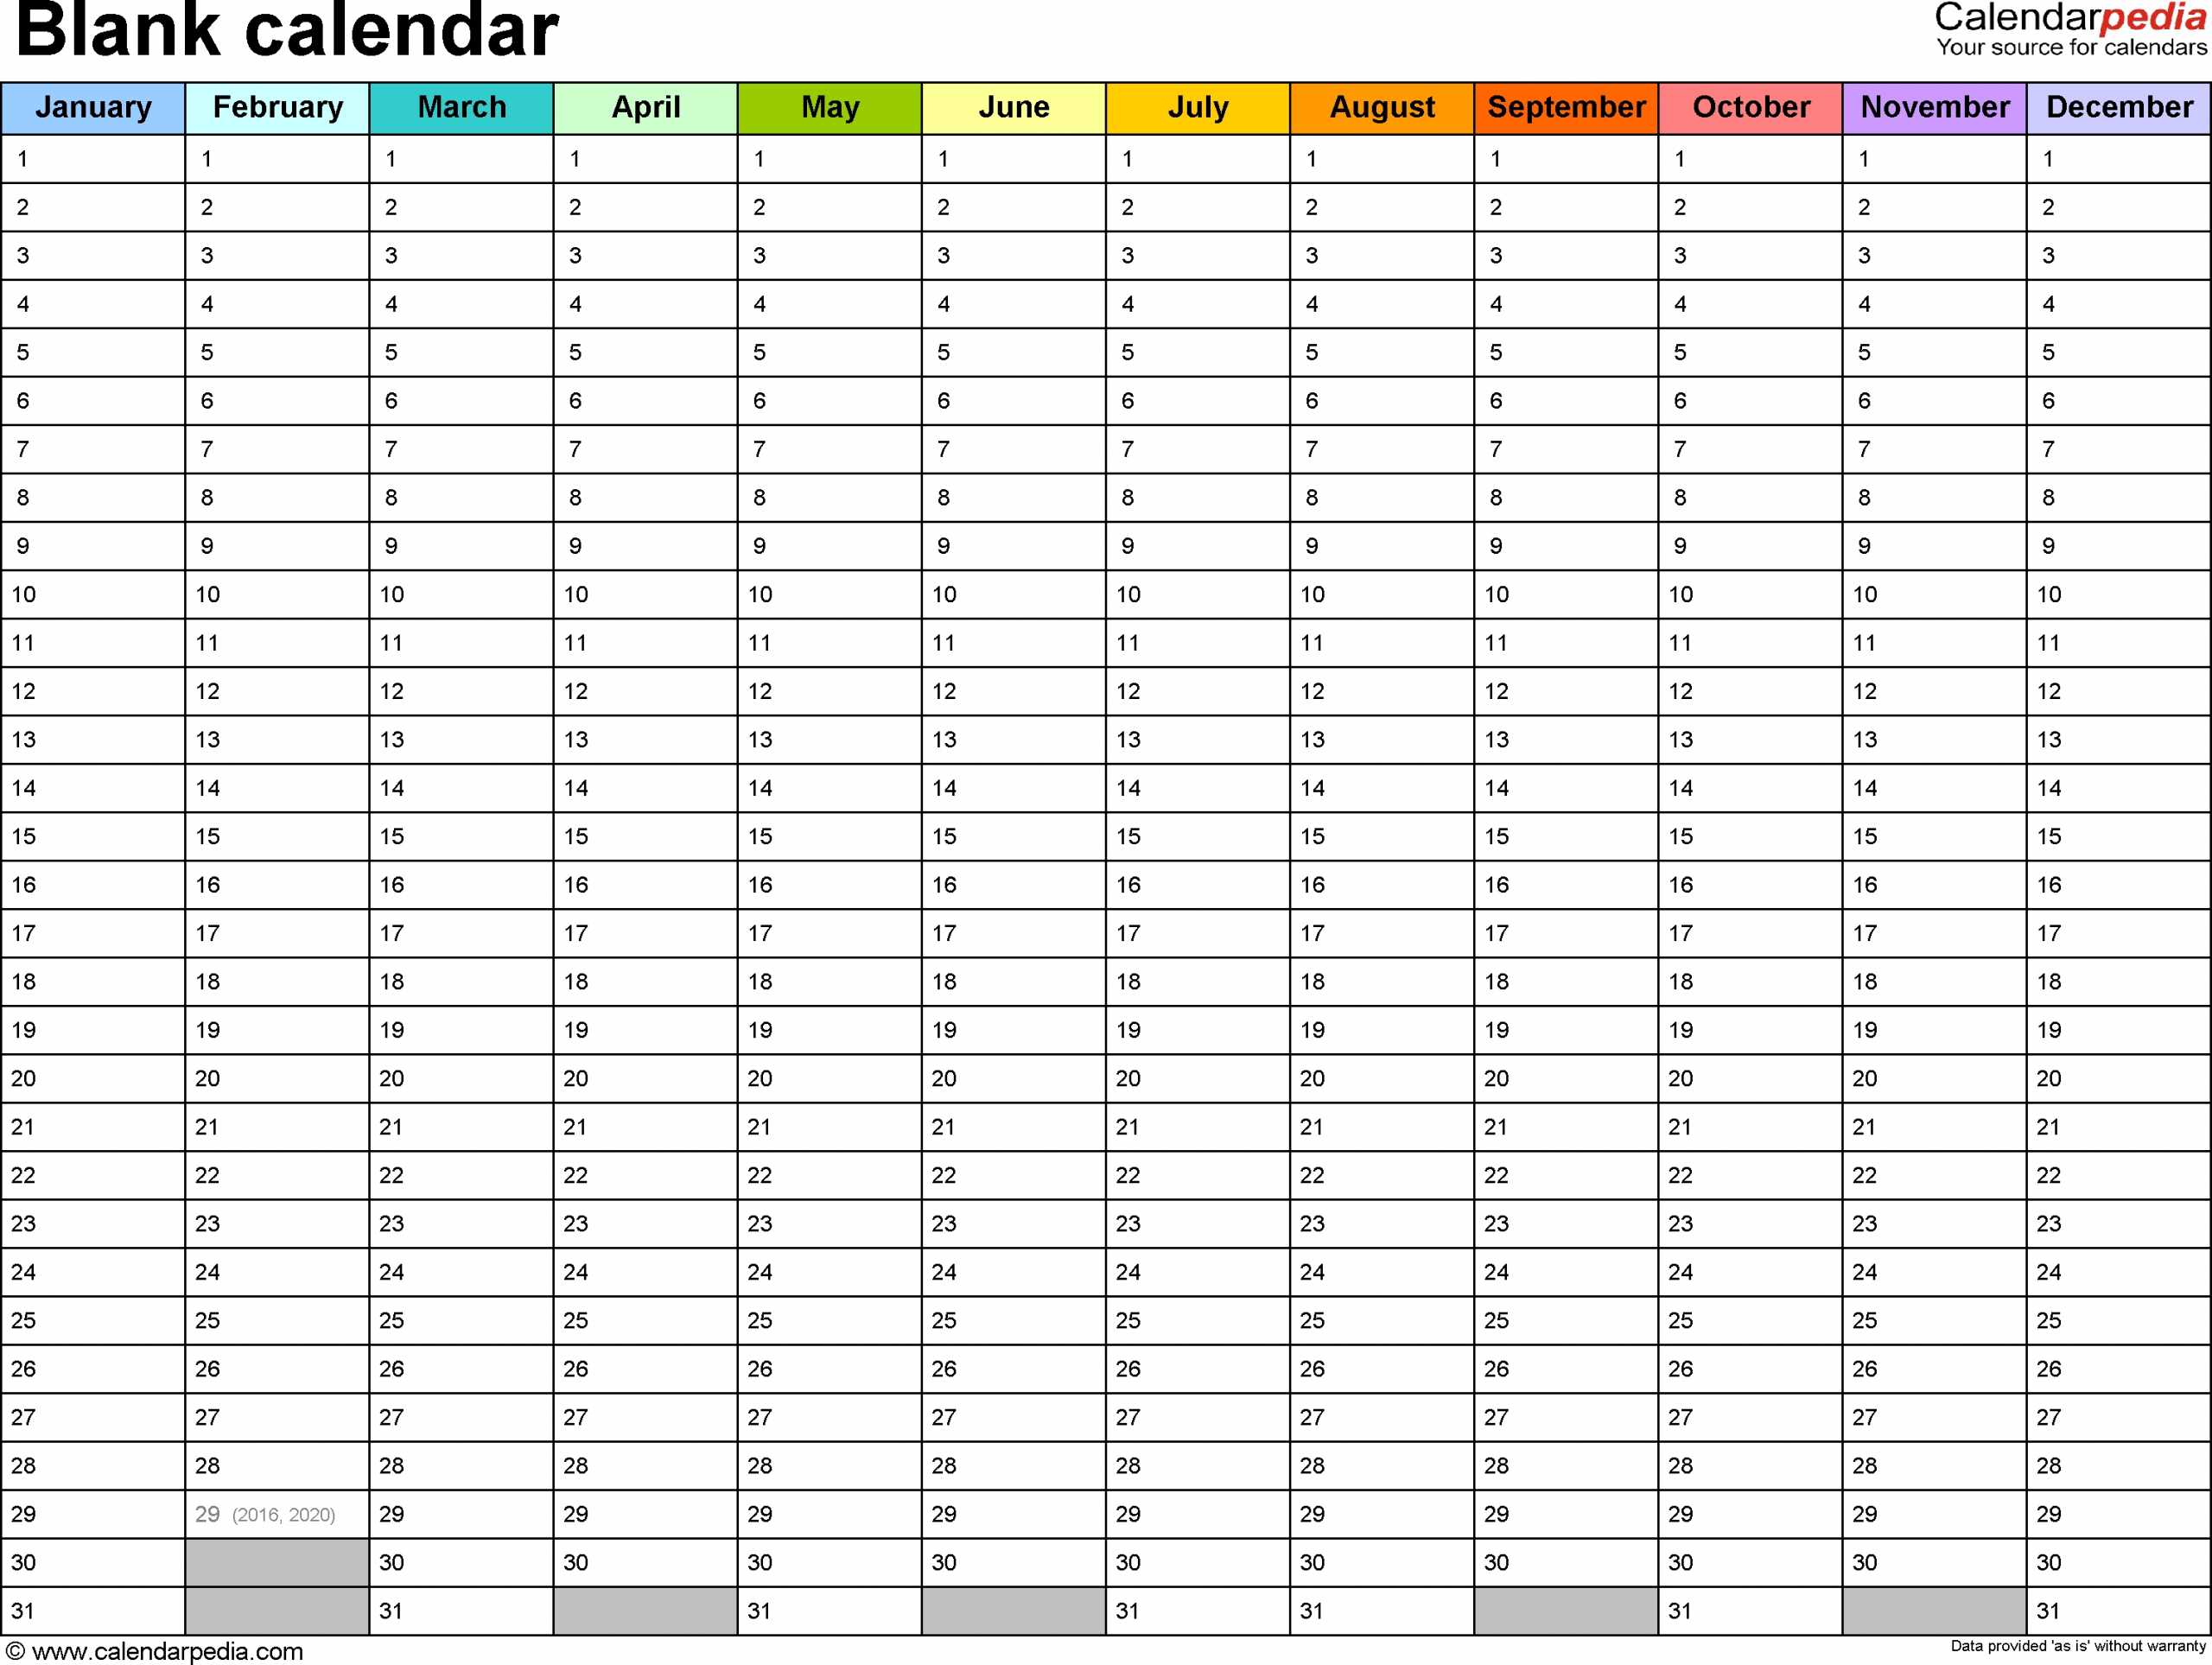 Blank Calendar You Can Type In Working Calendar 1